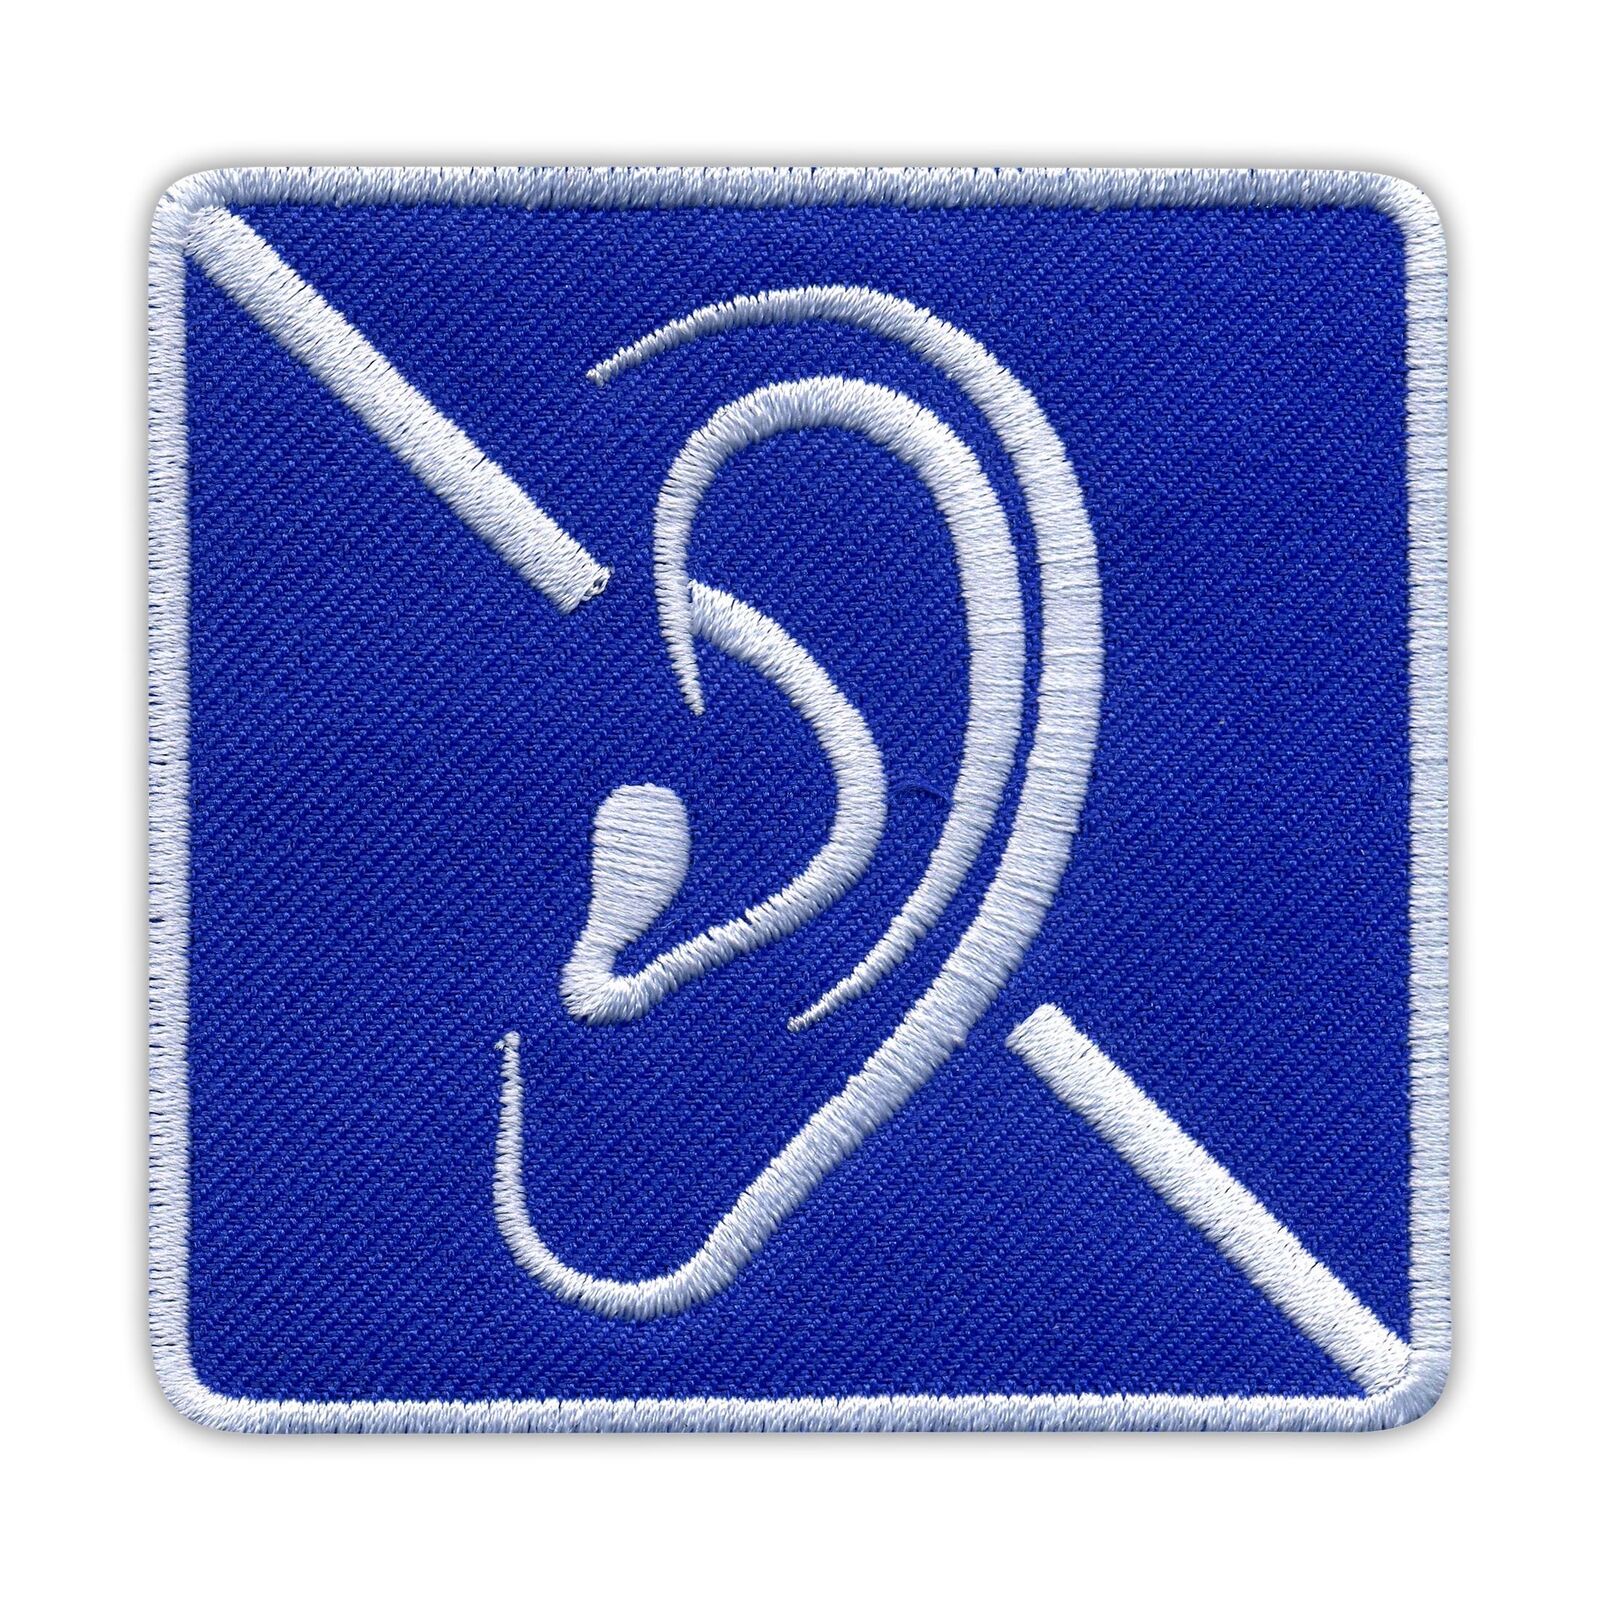 DEAF Sign - symbol for deafness Patch/Badge Embroidered